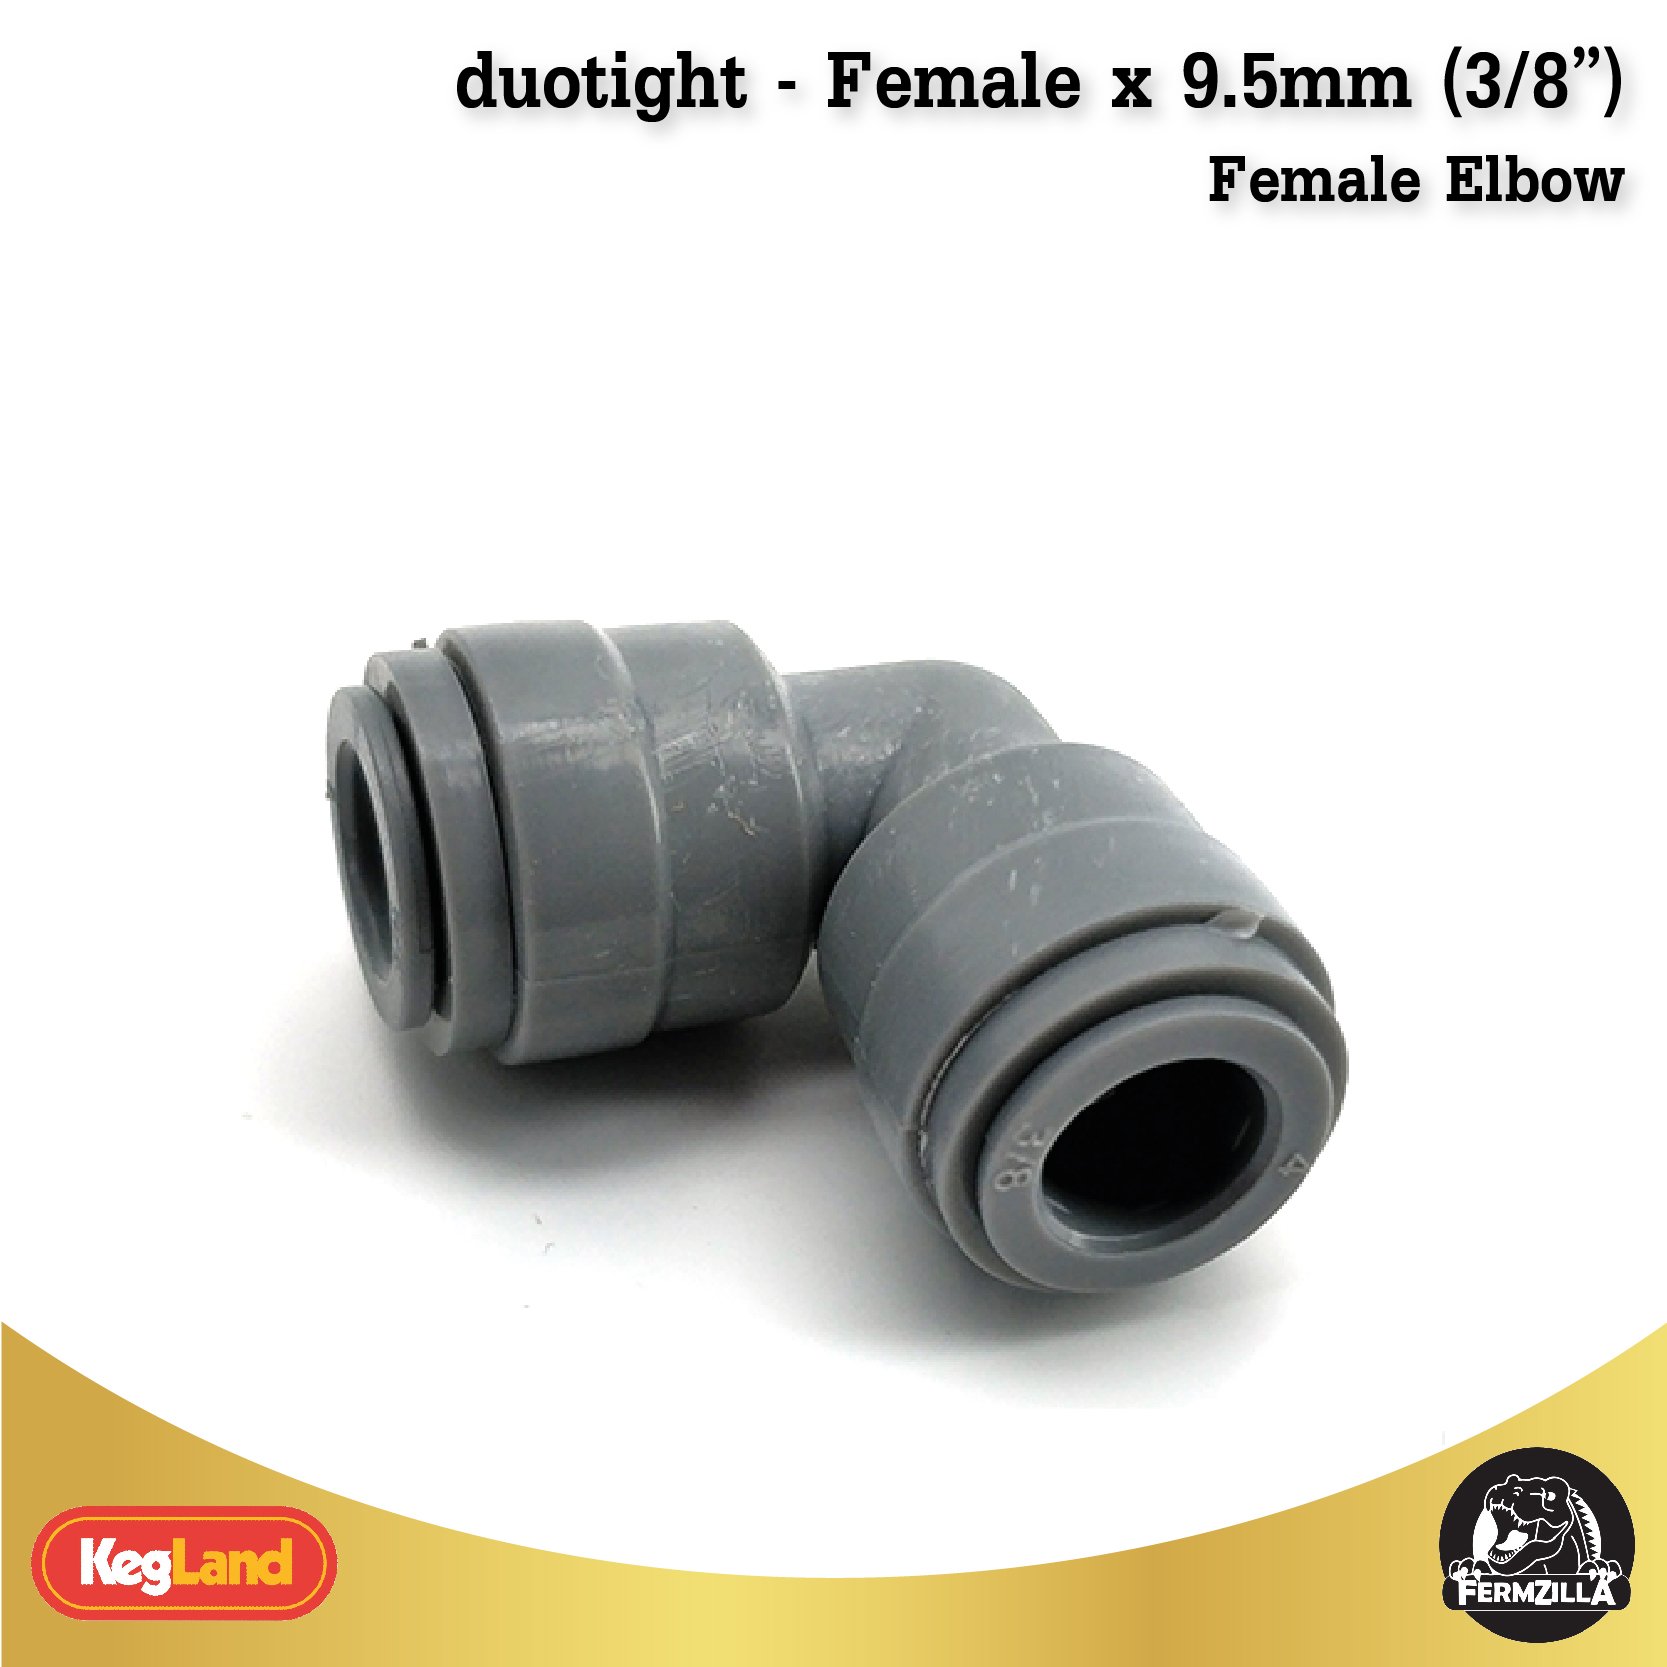 duotight - 9.5mm (3/8”) Female x 9.5mm (3/8”) Female Elbow